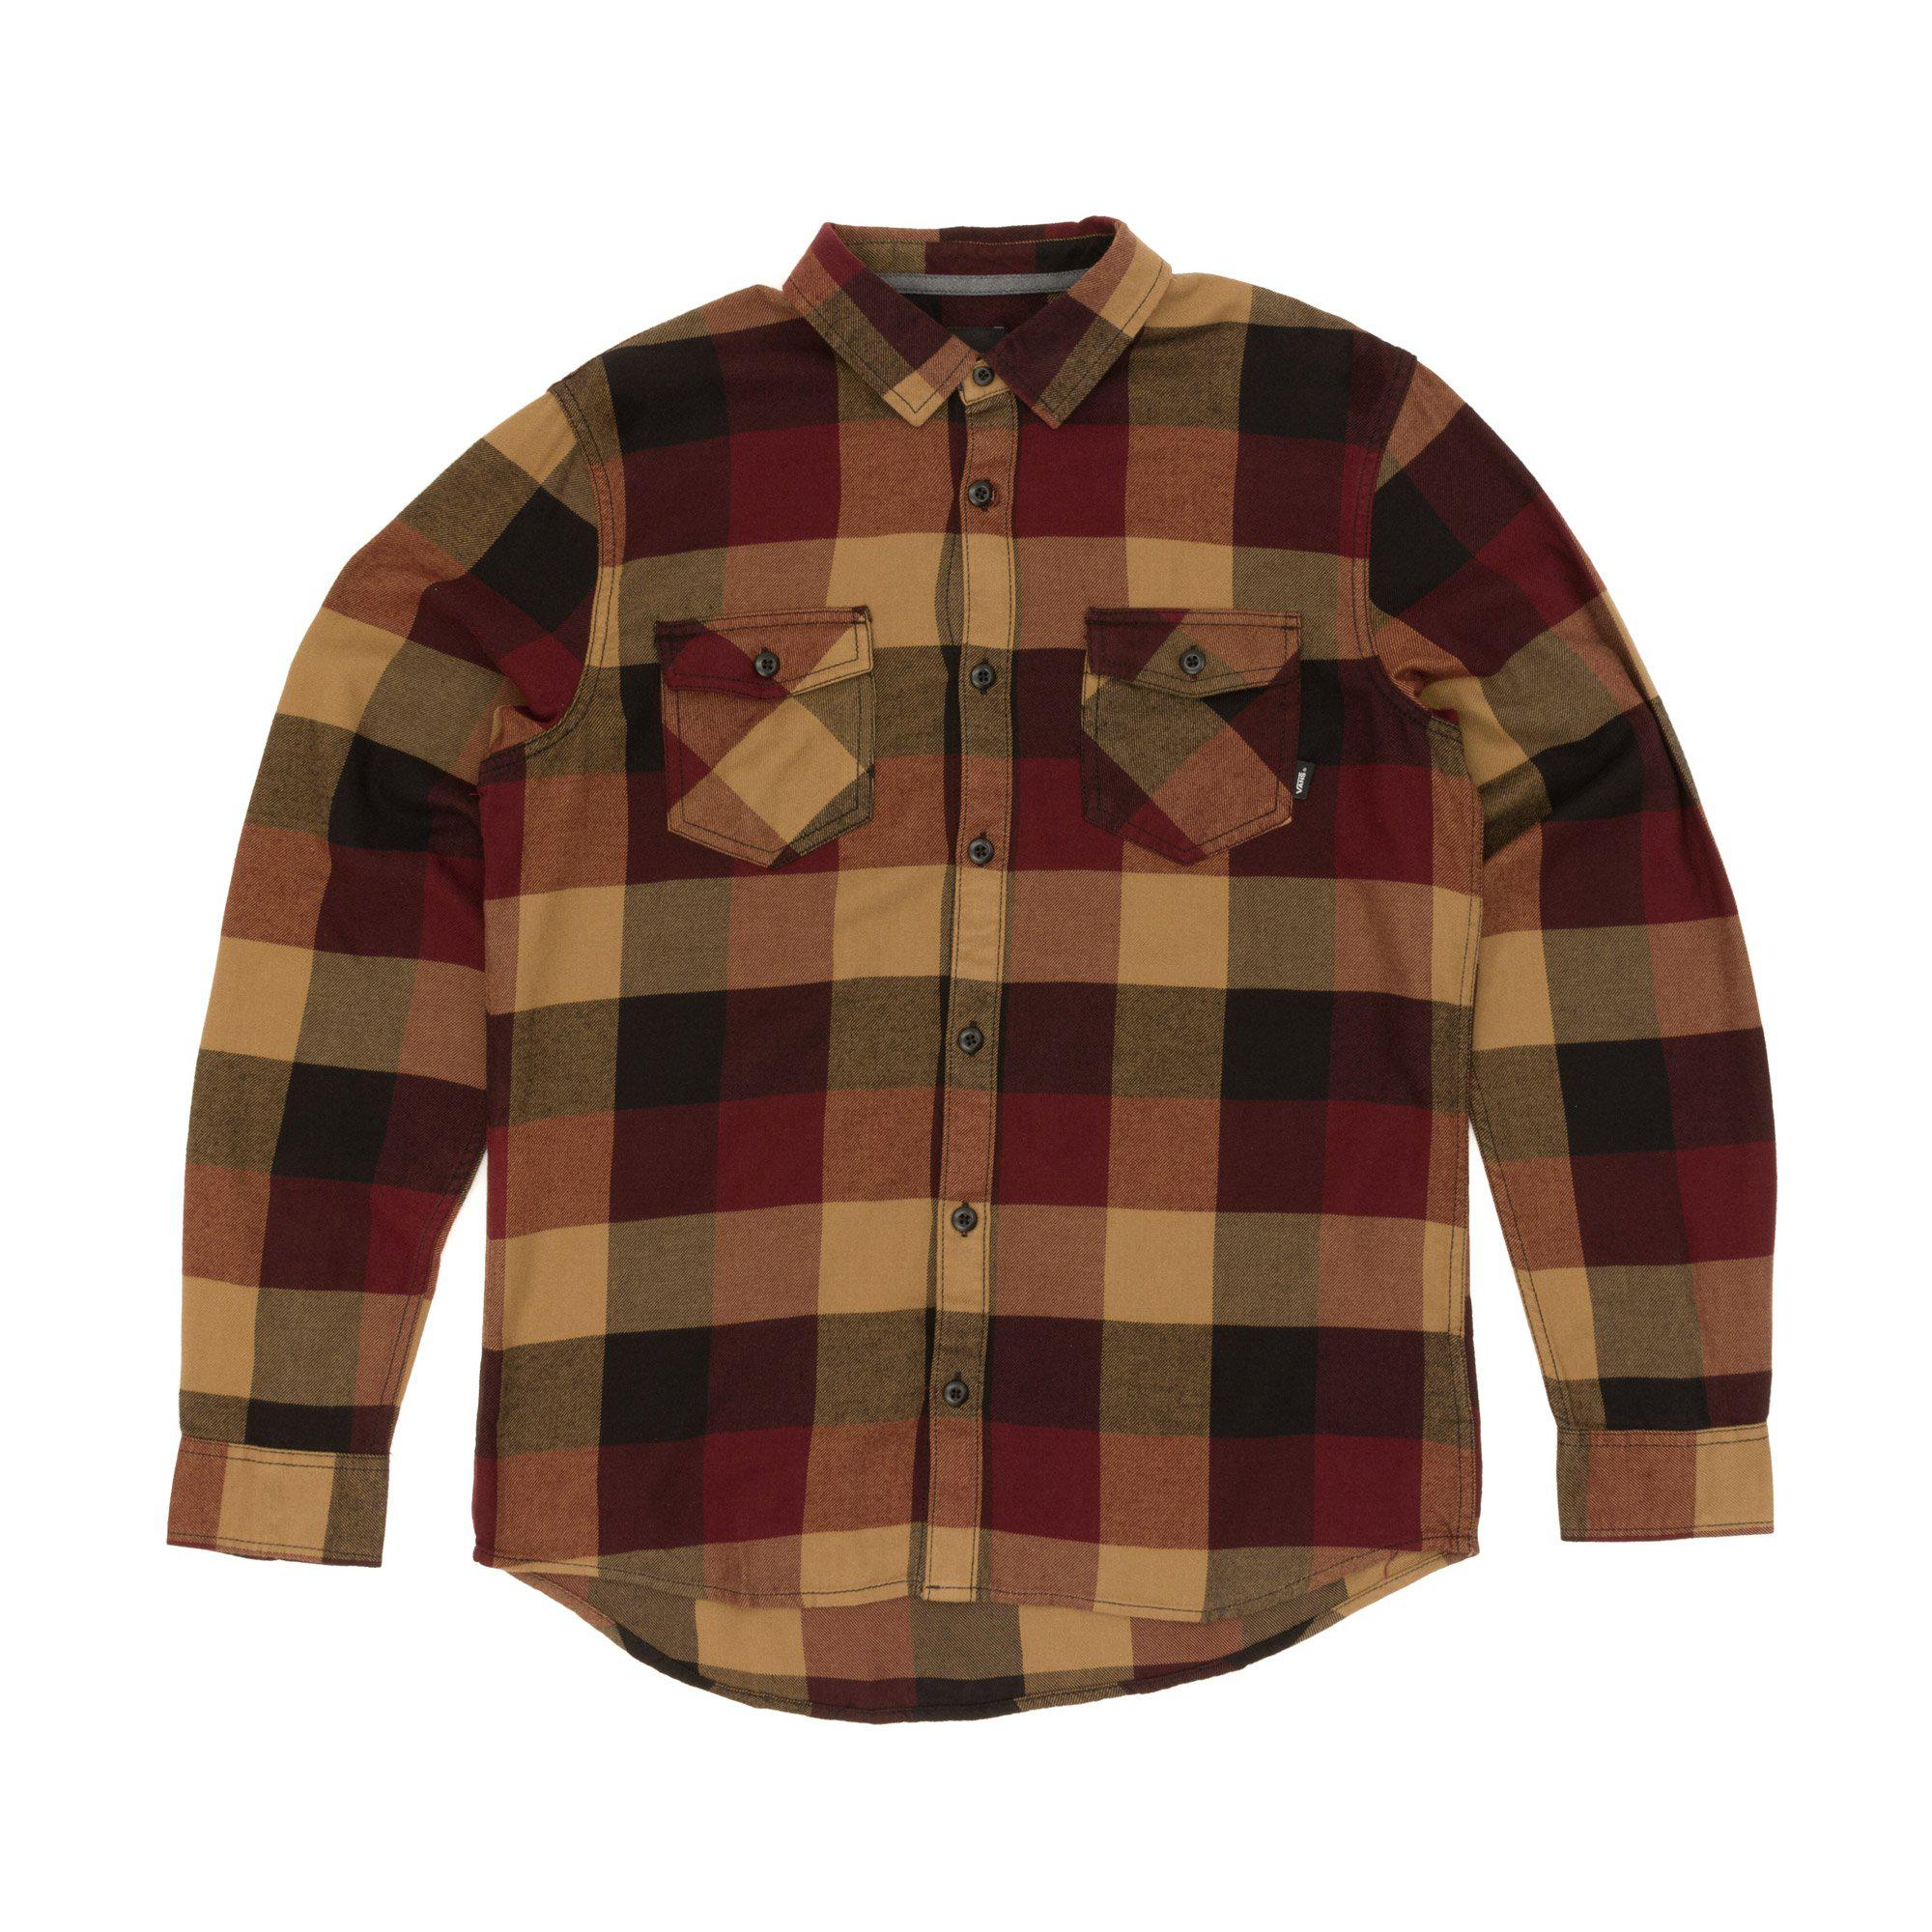 Vans Box Flannel Shirt in Burgundy (Brown) for Men - Lyst